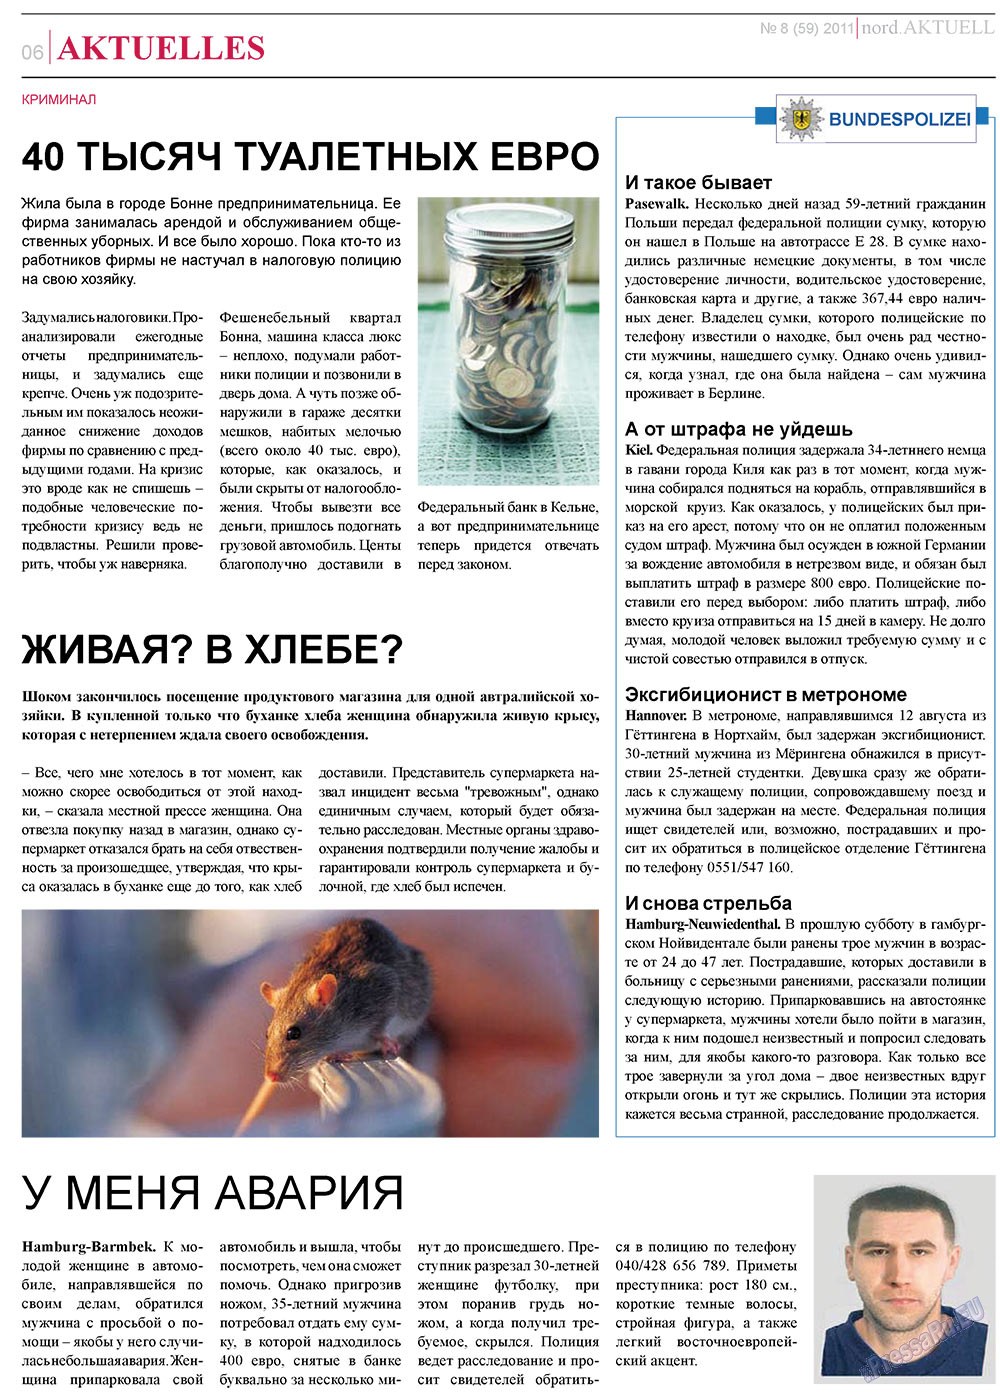 nord.Aktuell, газета. 2011 №8 стр.6